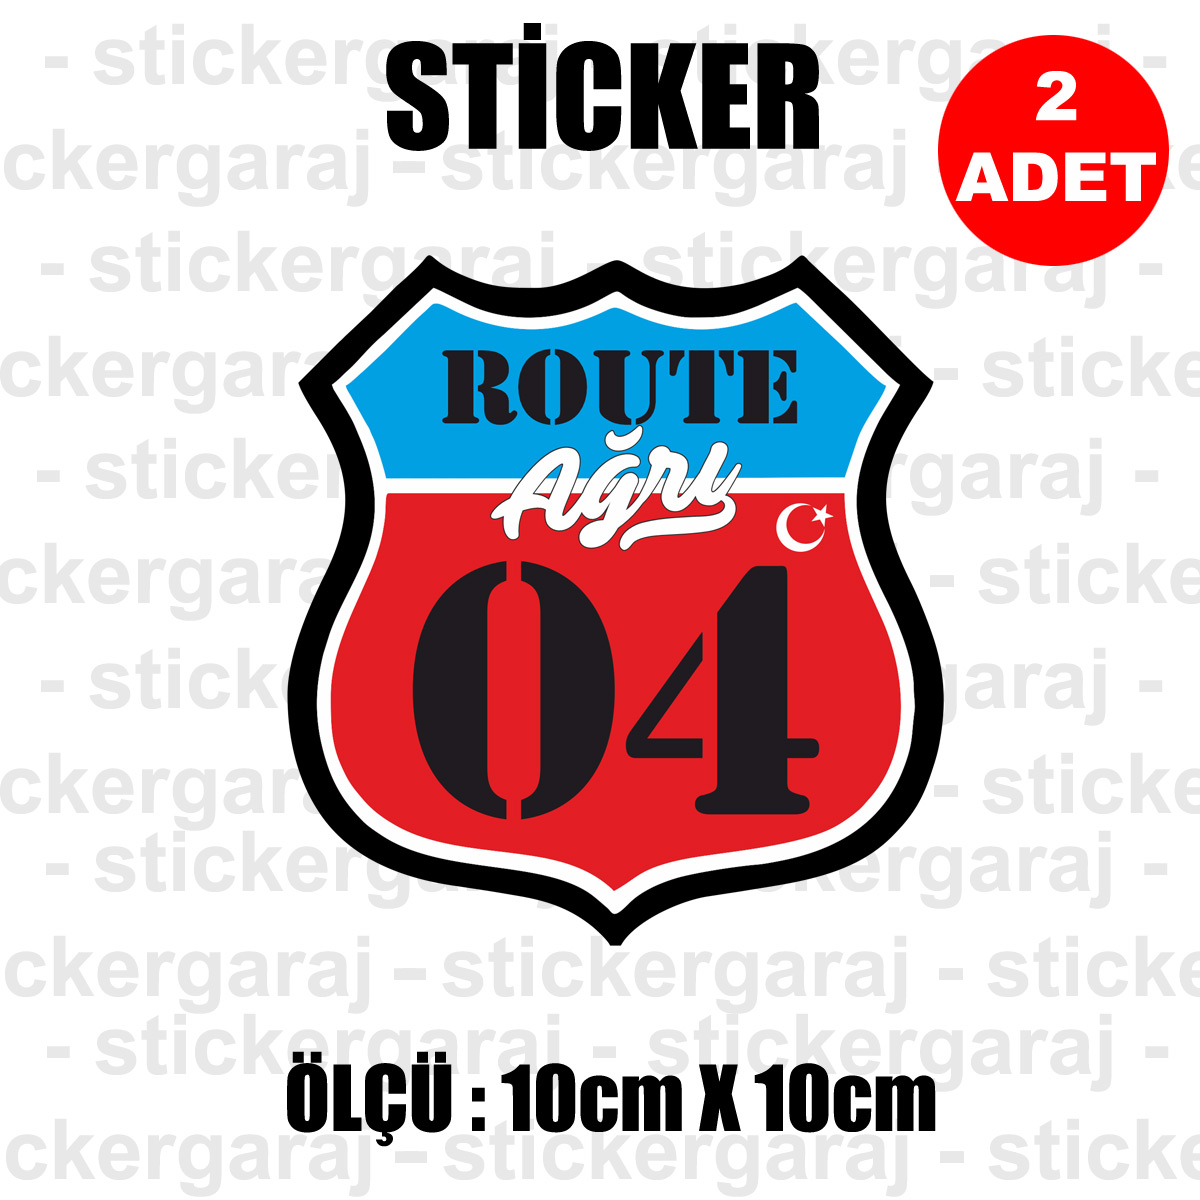 04 AGRI - 04 Ağrı Rota İl Kodu Sticker